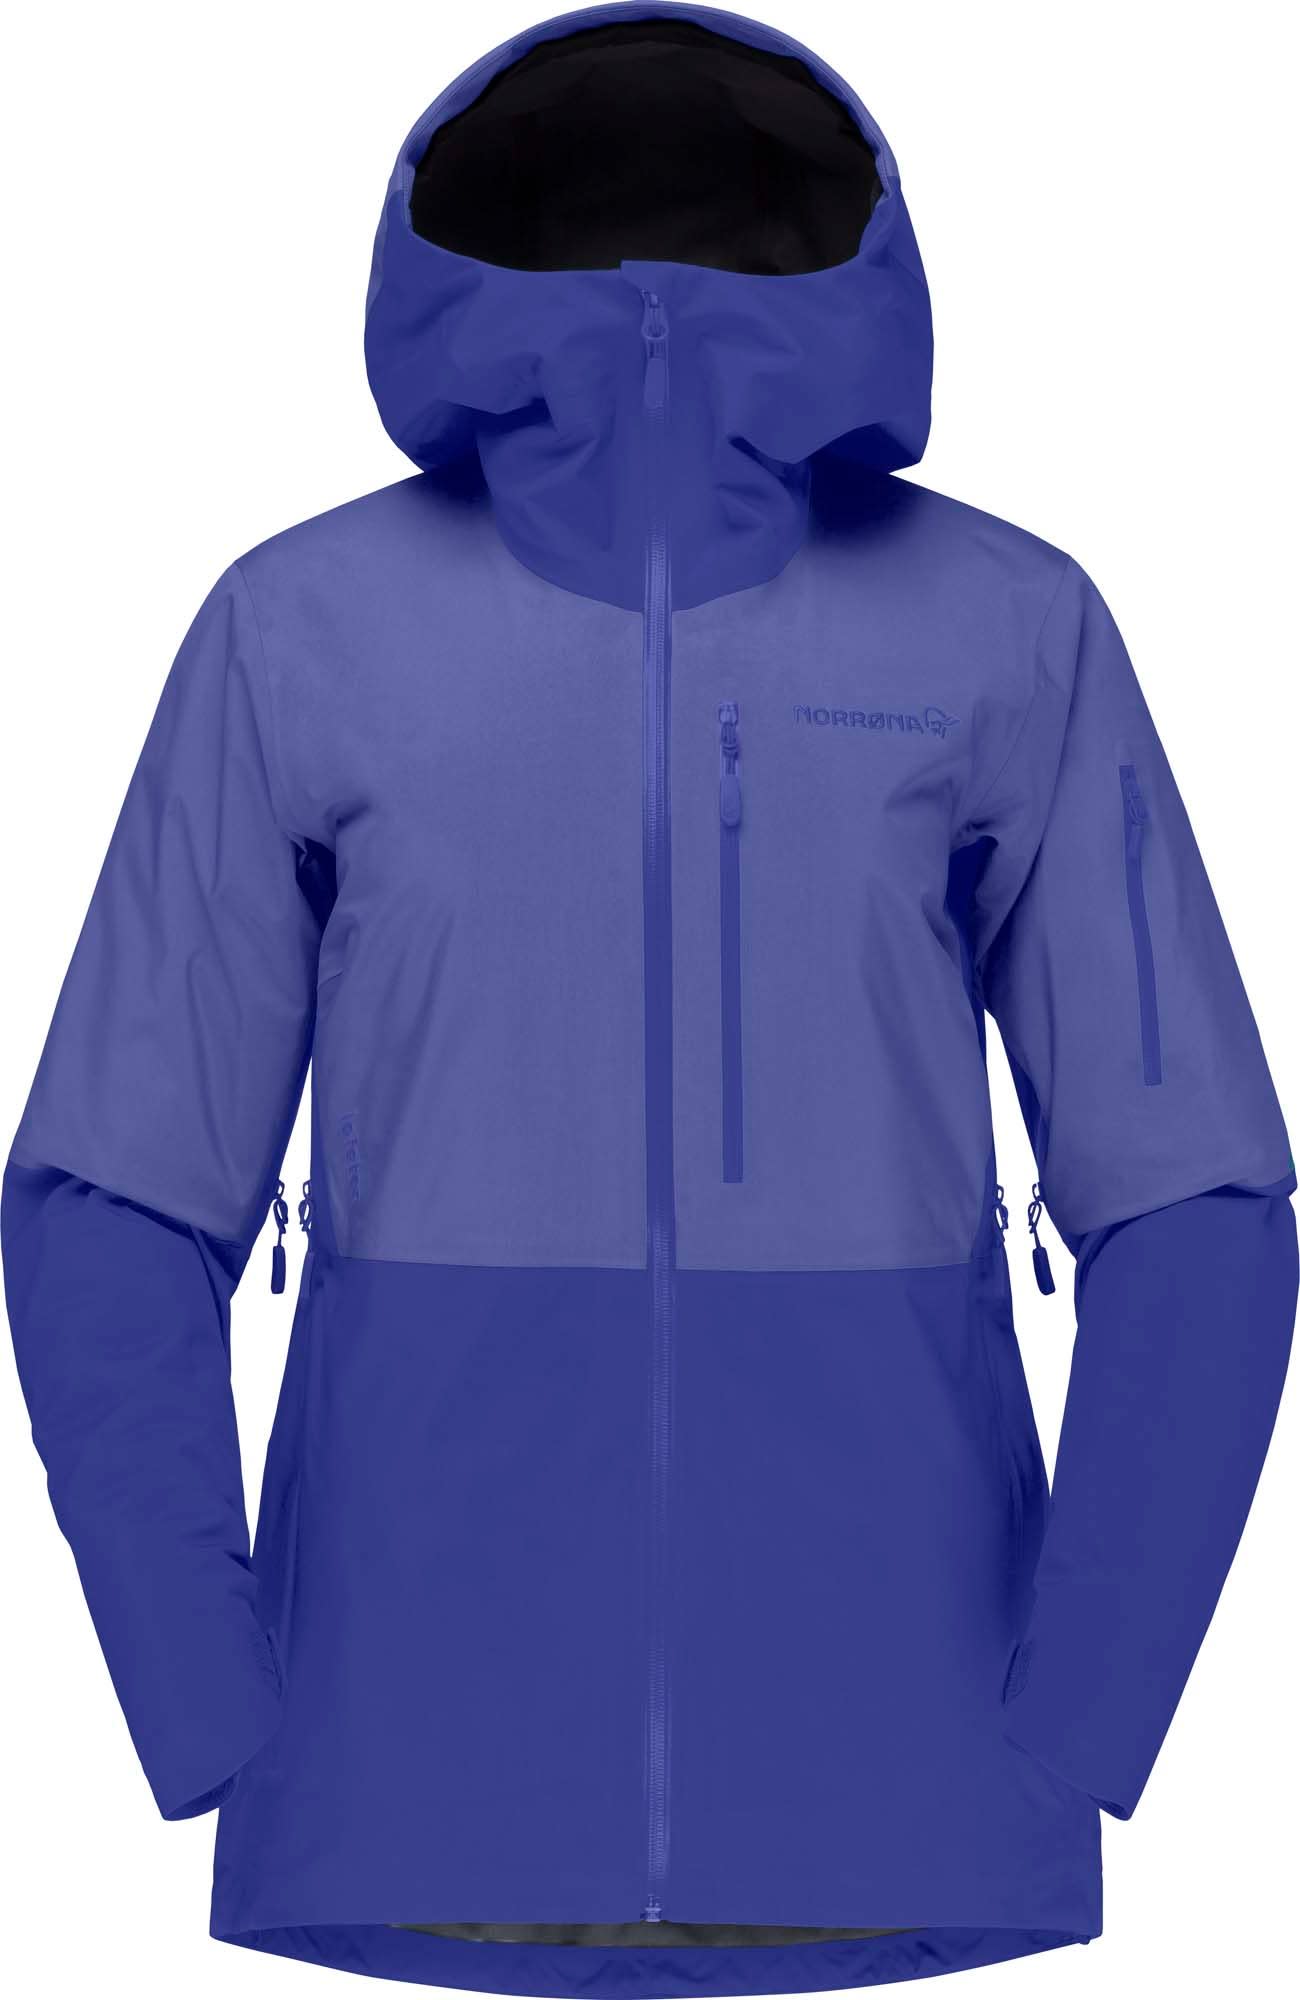 Women's Lofoten GORE-TEX Jacket Violet Storm/Royal Blue